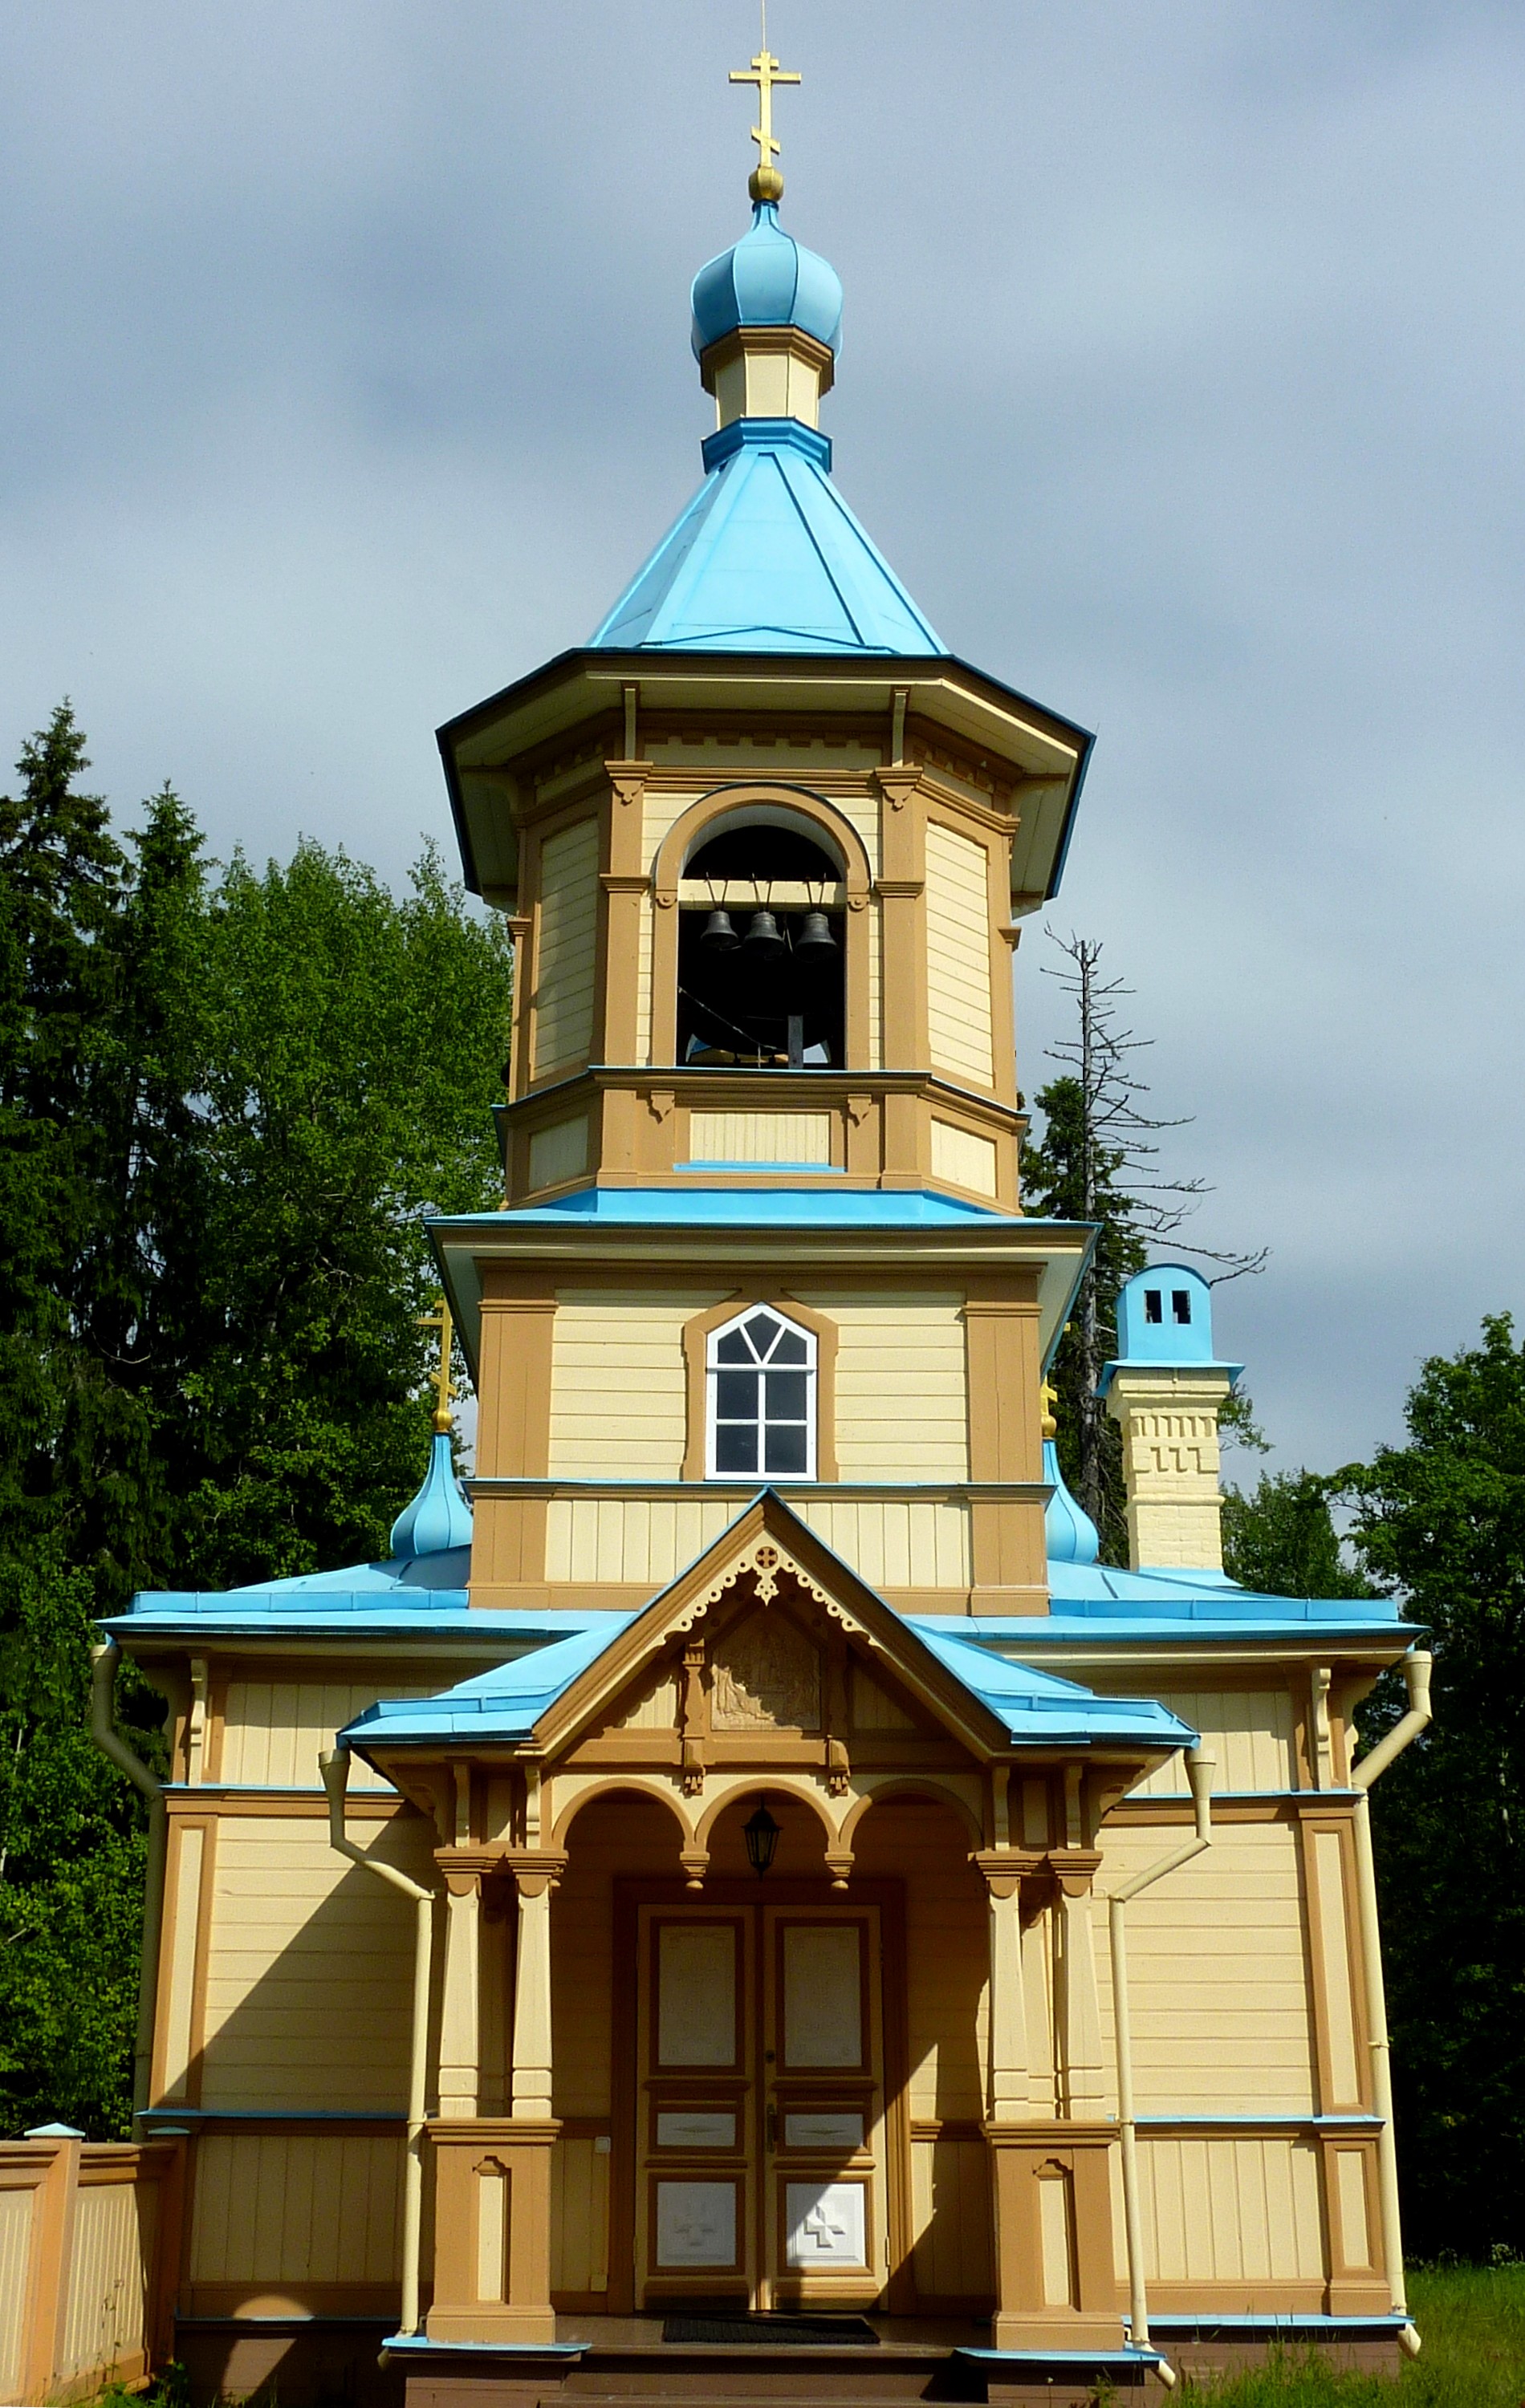 Small church entrance side